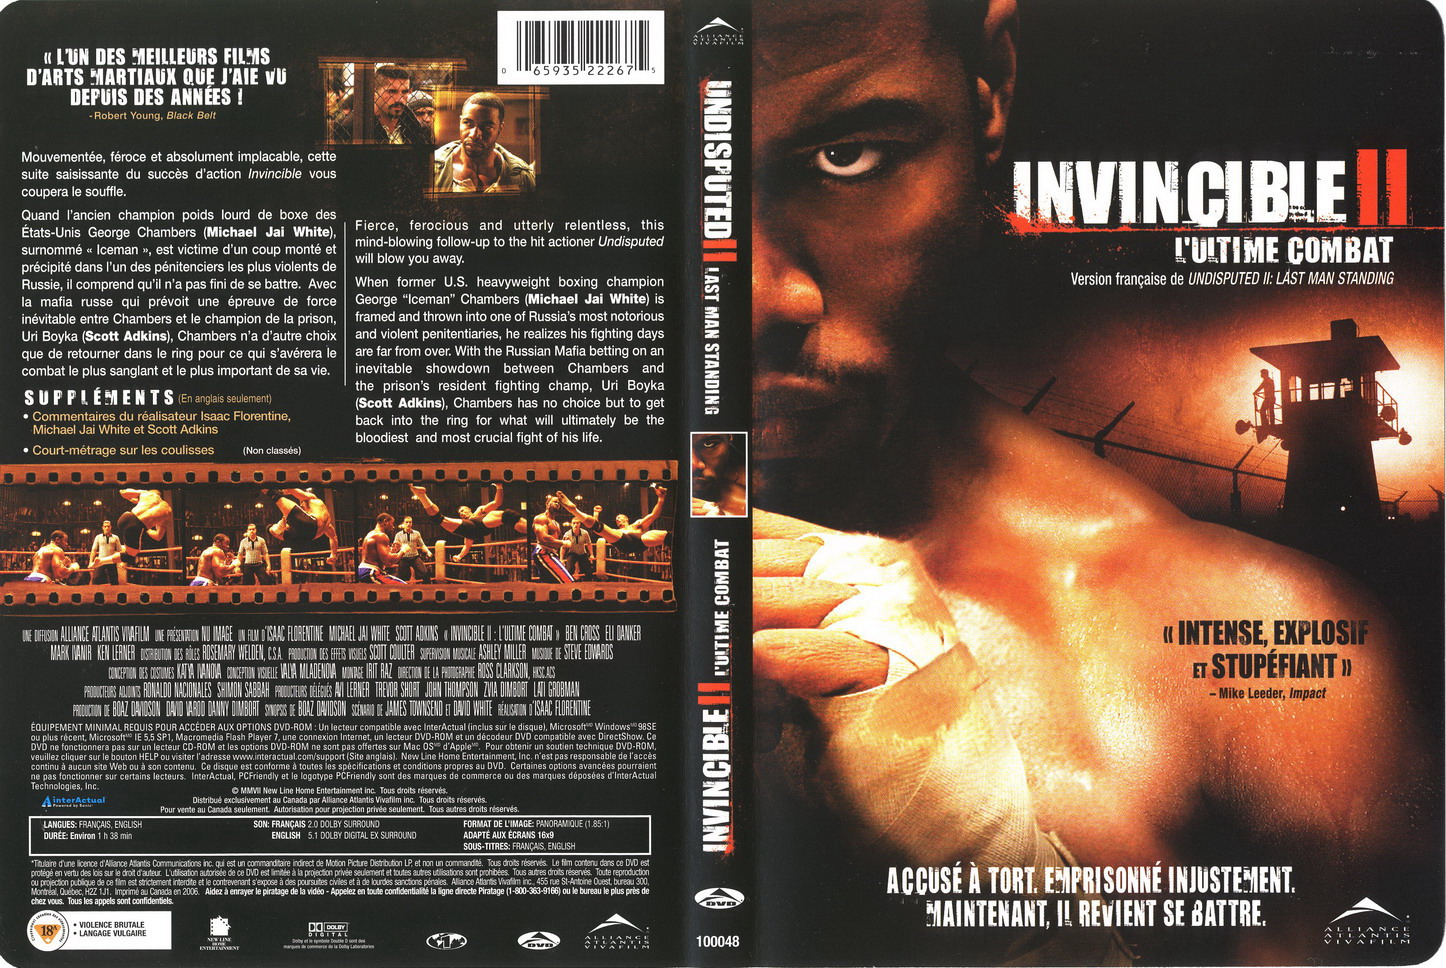 Jaquette DVD Invincible 2 L